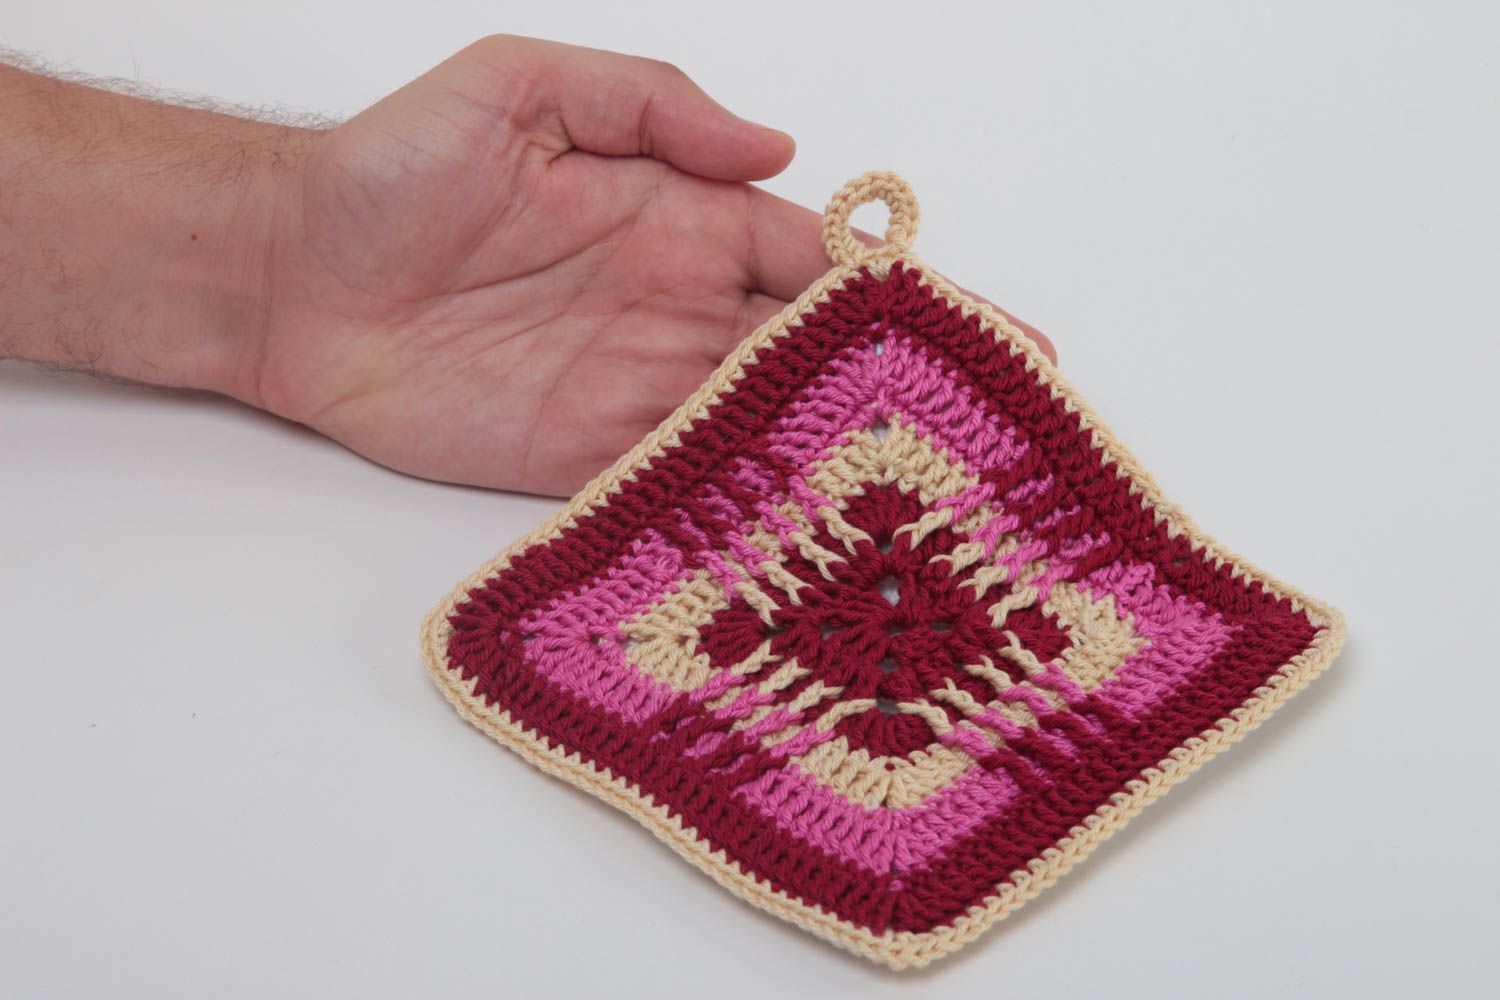 Unusual handmade pot holder decorative crochet potholder the kitchen gift ideas photo 5